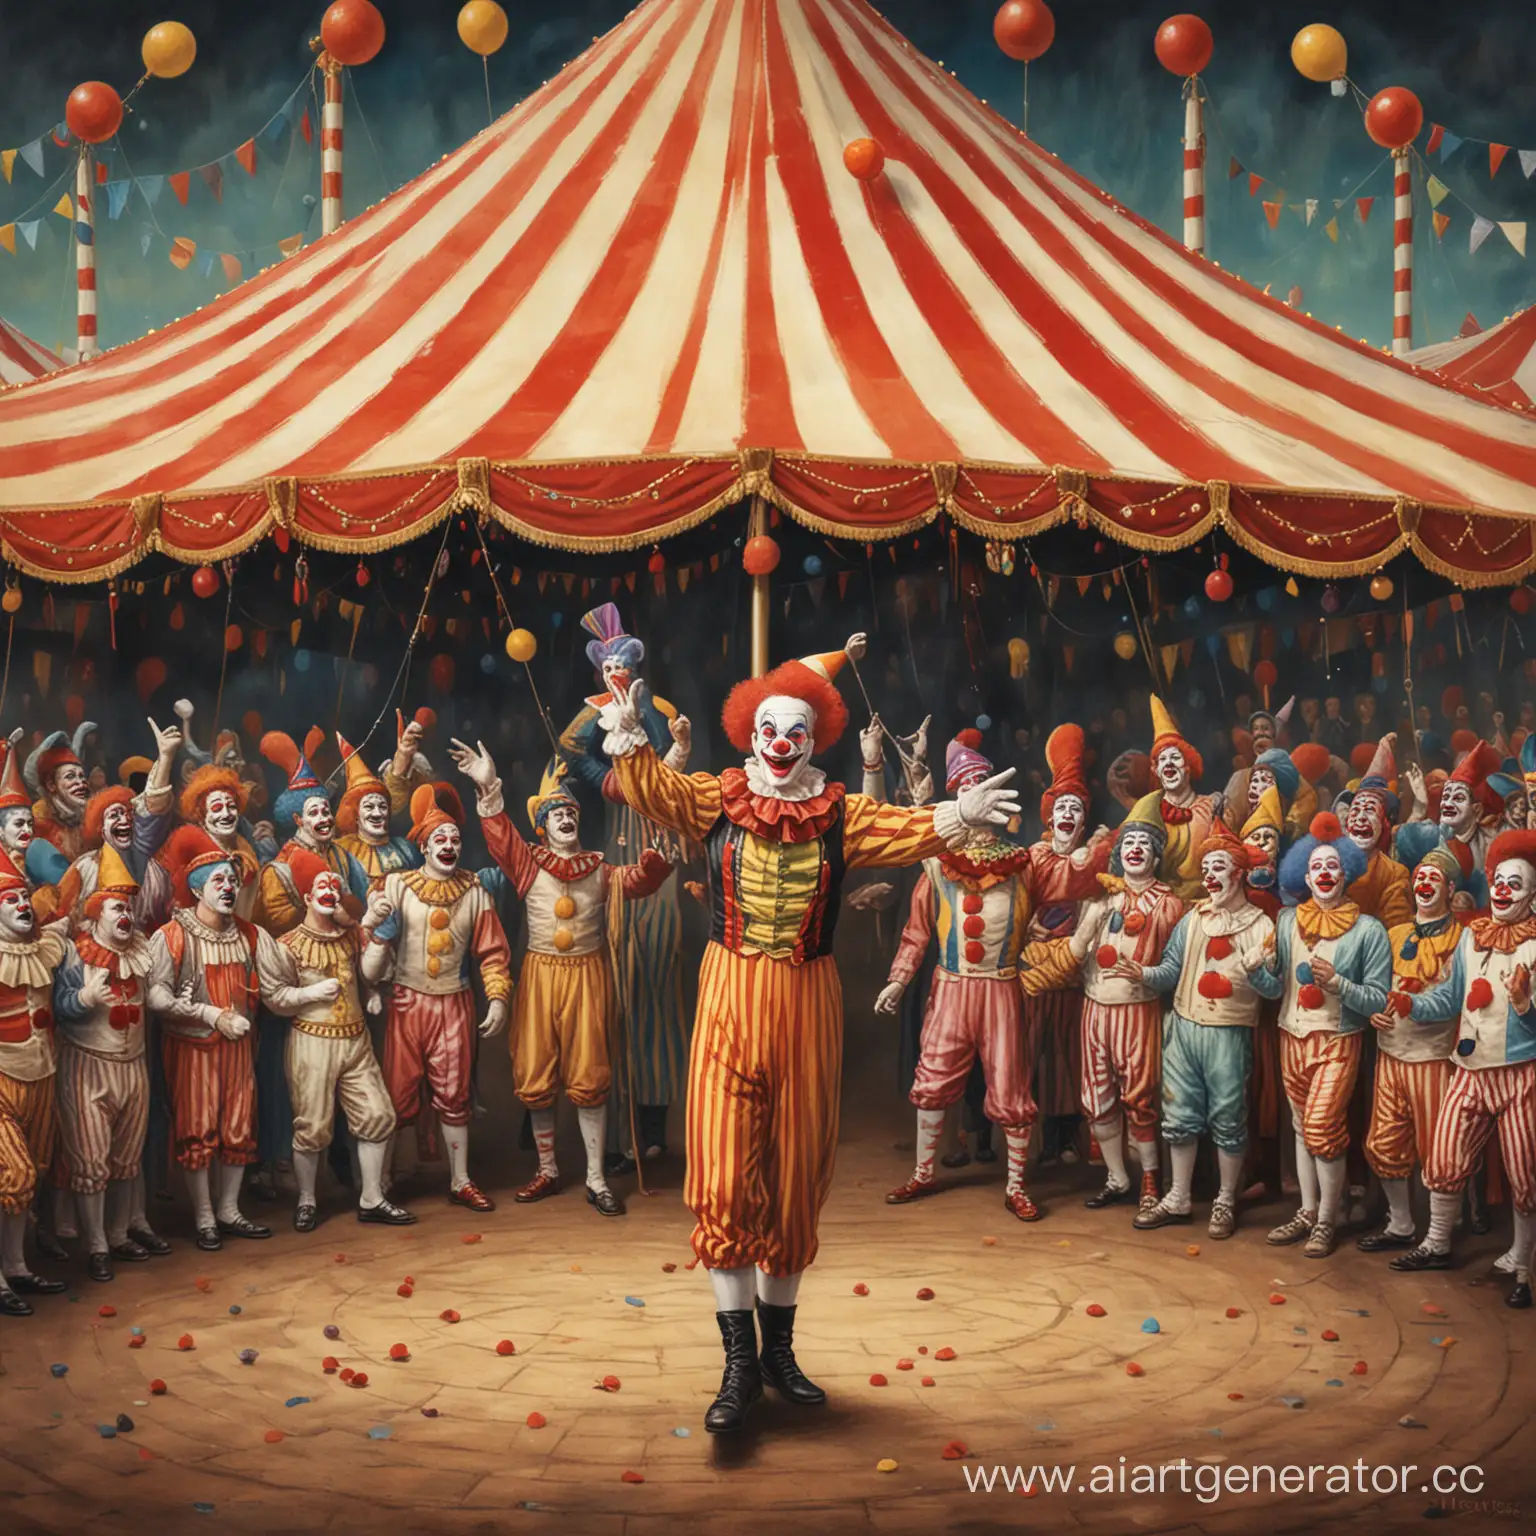 цирк с клоунами, шутами и мимами